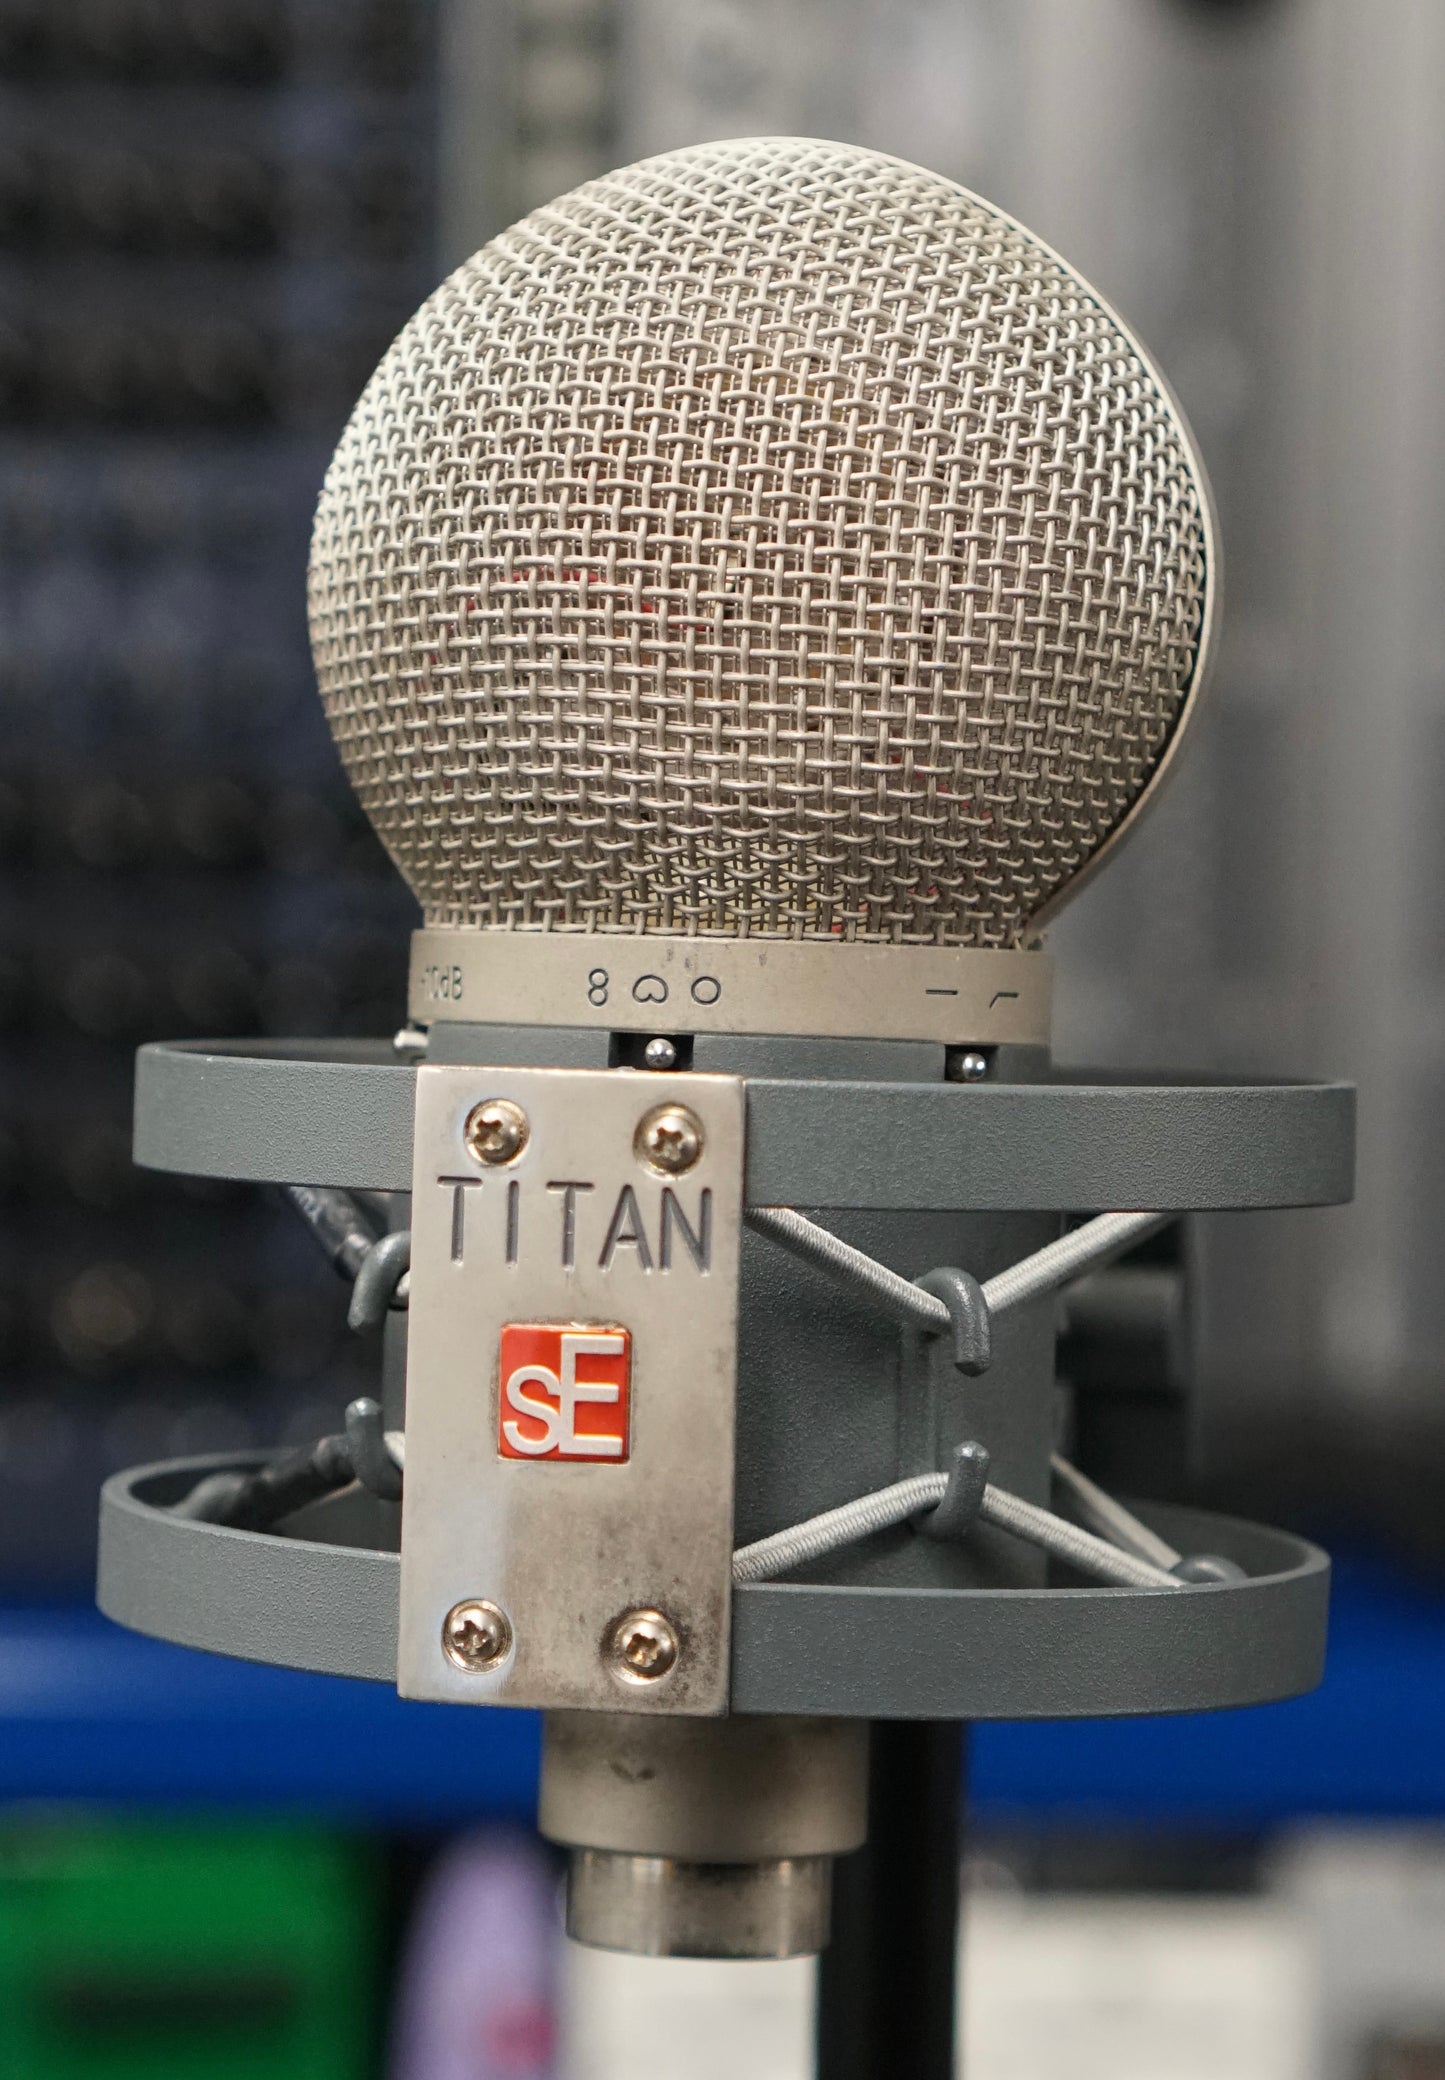 sE Electronics Titan